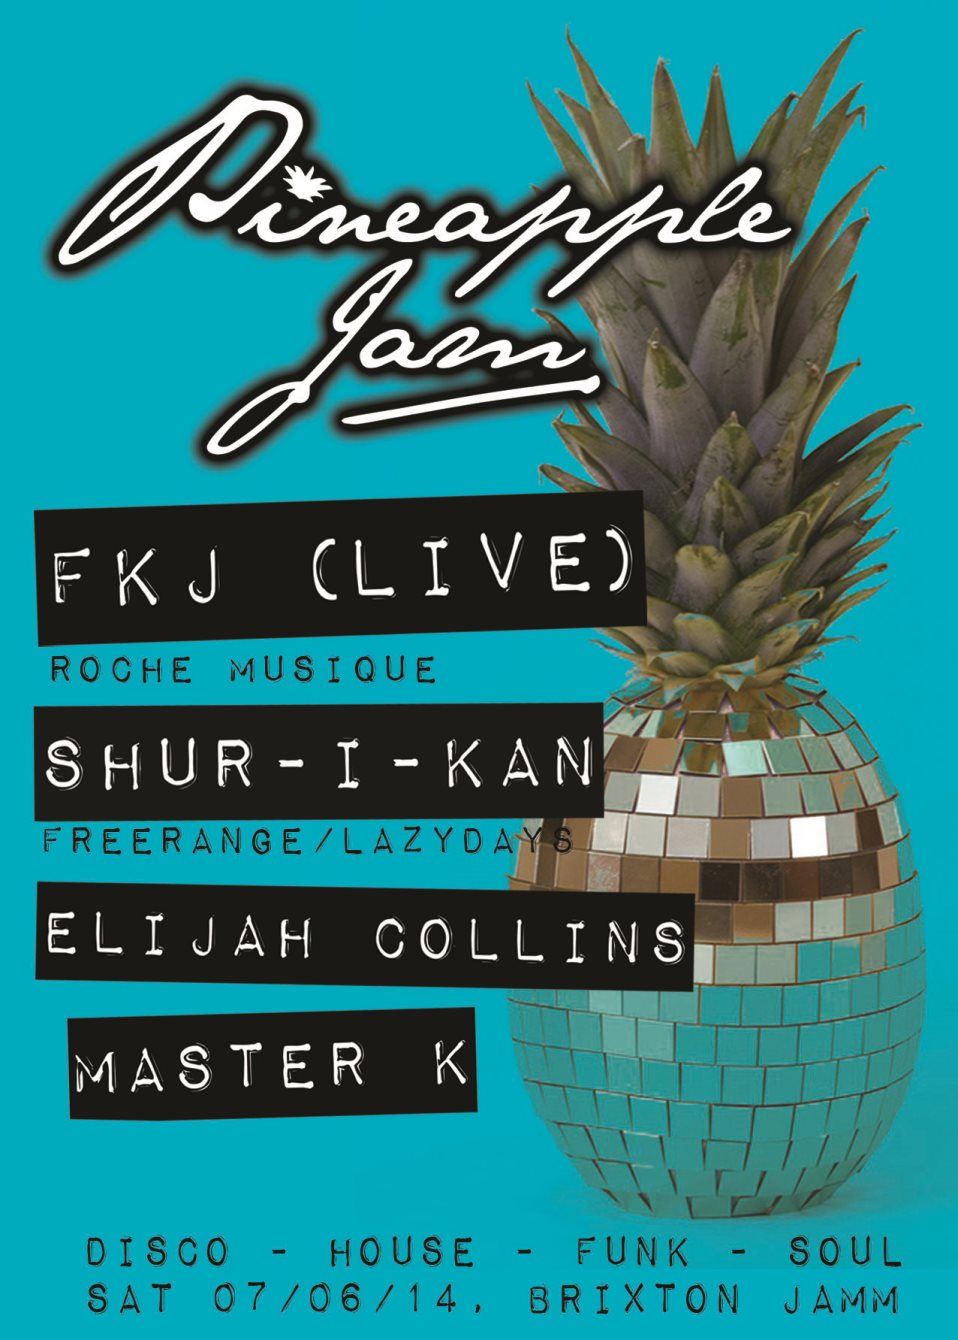 Pineapple Jam with FKJ(Live), Shur-i-kan, Elijah Collins, Jonny Tawn - Flyer front